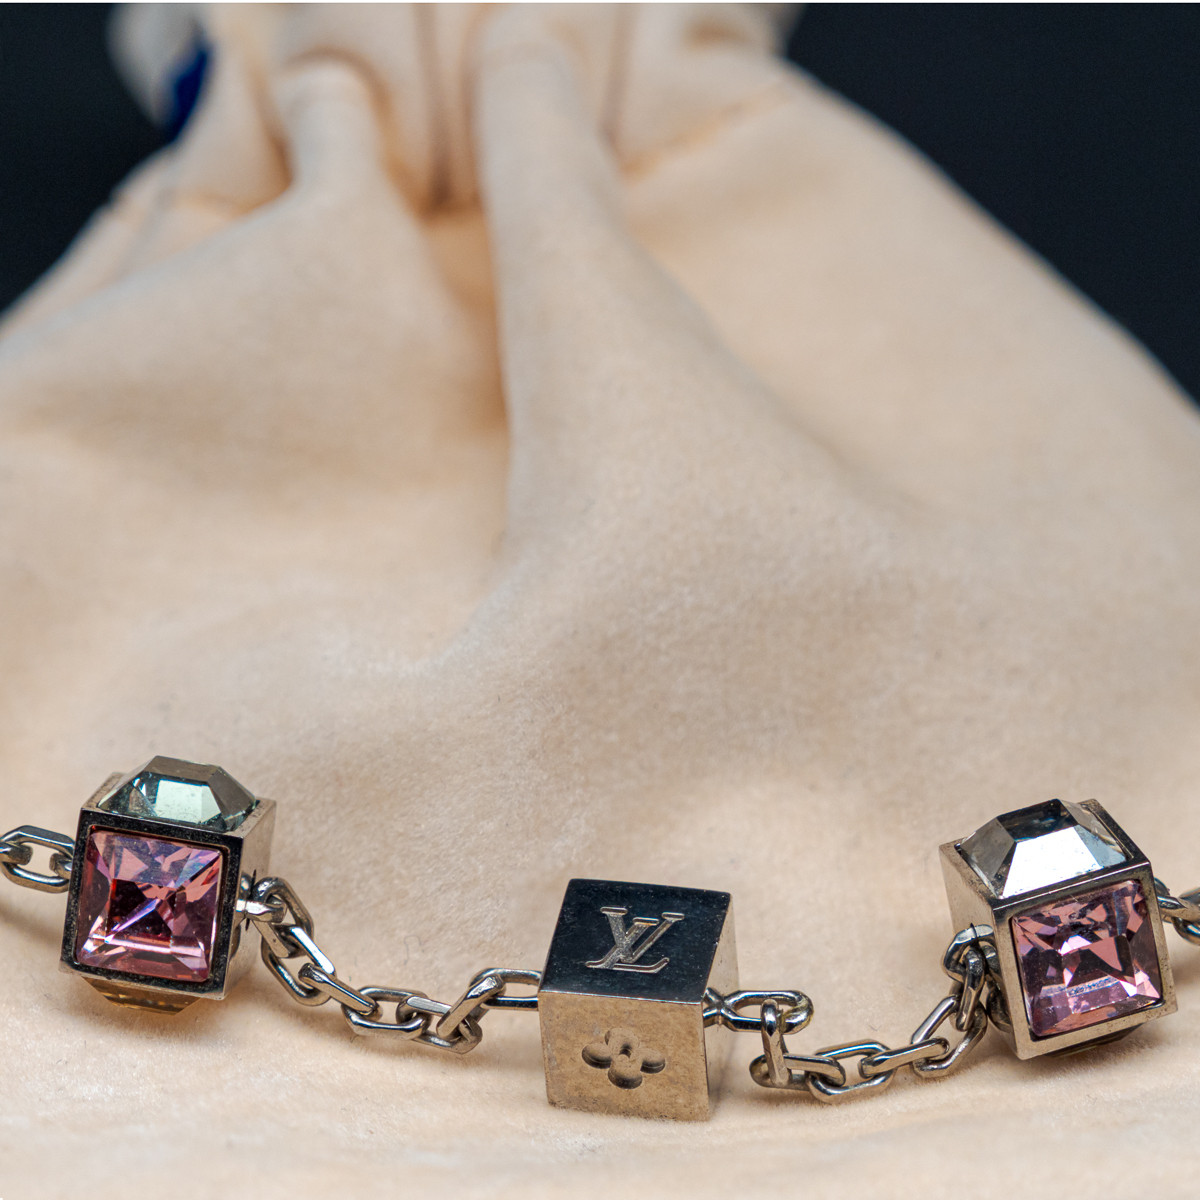 Pre-owned Louis Vuitton Silver Tone Gamble Crystal Bracelet